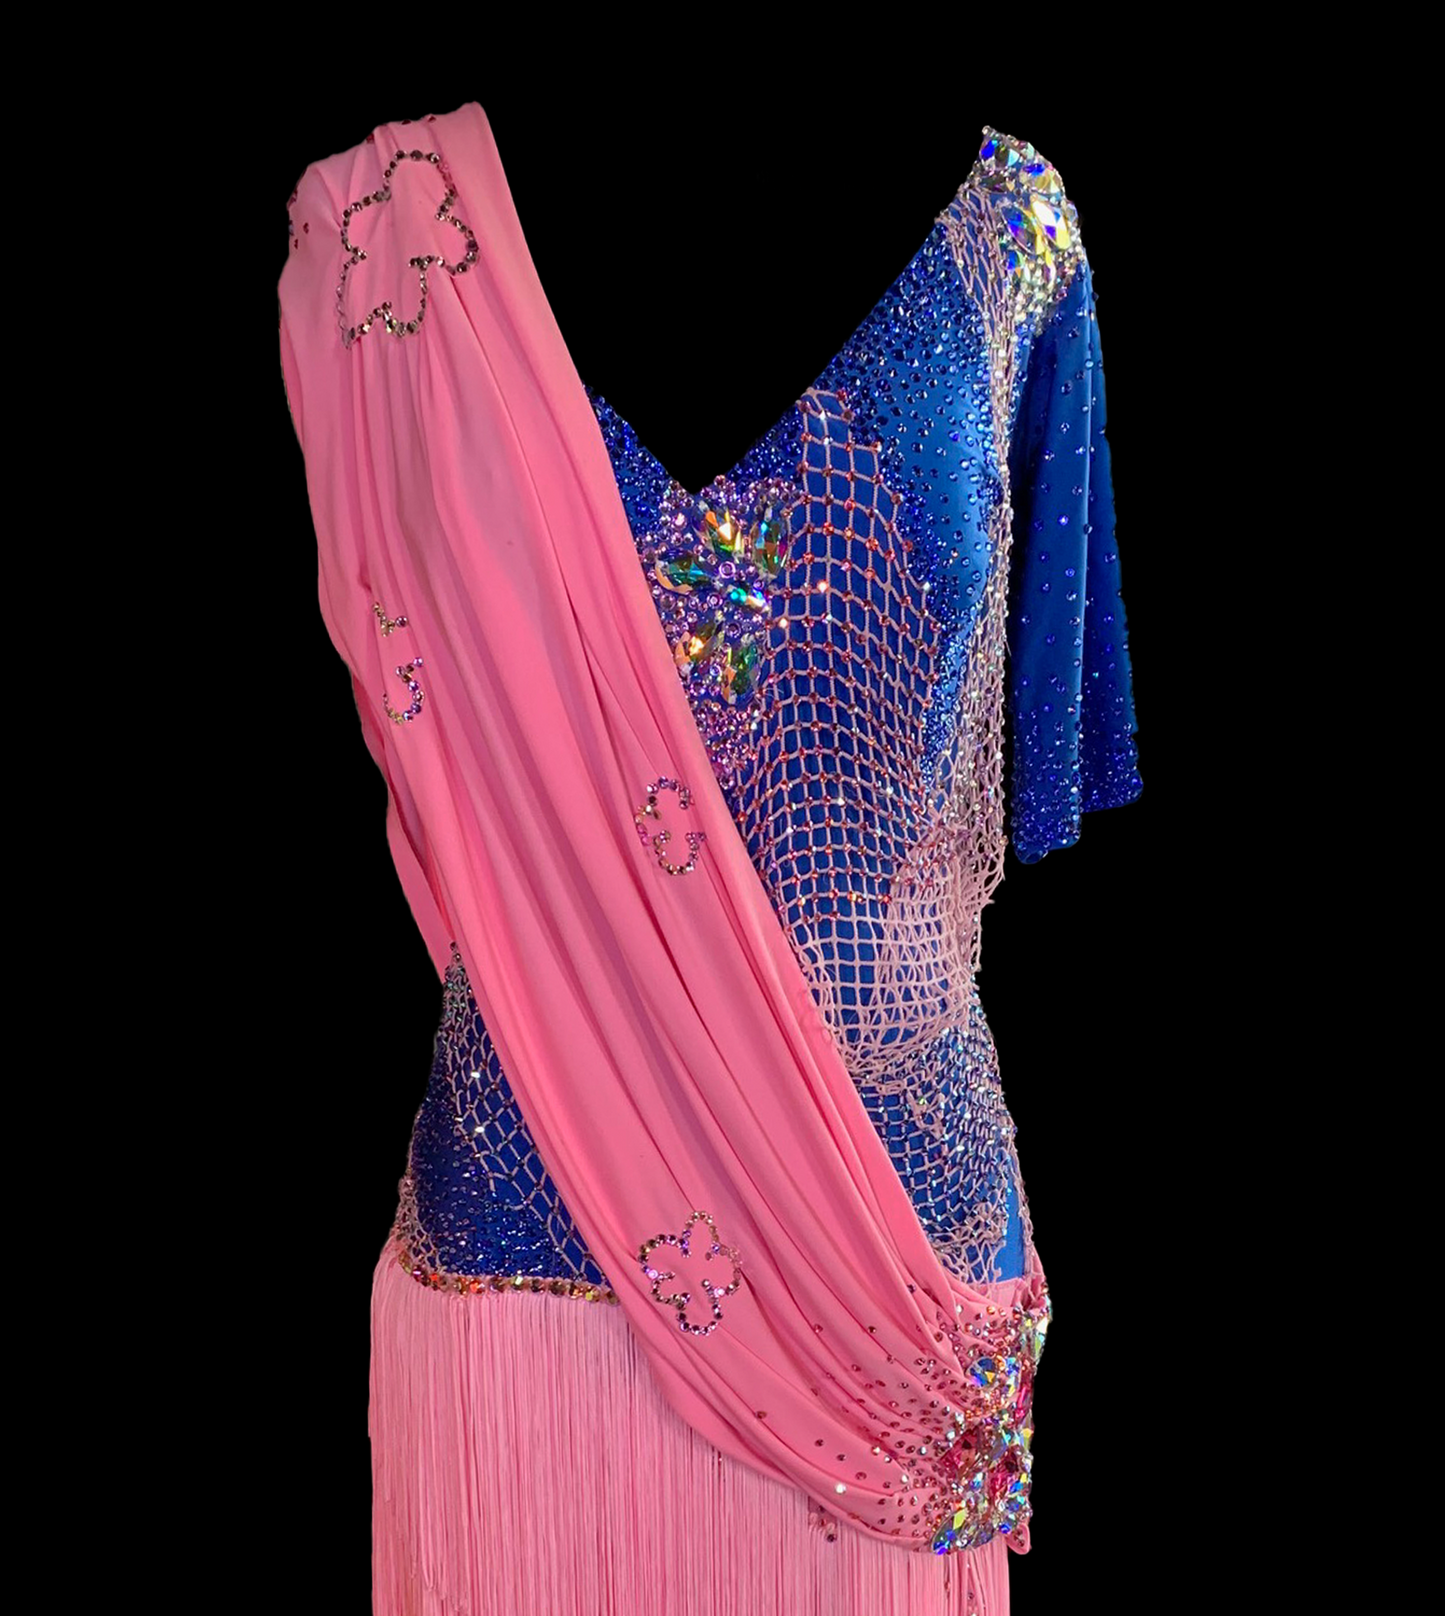 Single Sleeve Blue Latin Dress with Pink Sash, Swarovski Stones, V-Neckline, Fishnet, and Layers of Pink Fringe on Skirt Sz L/XL Lat162